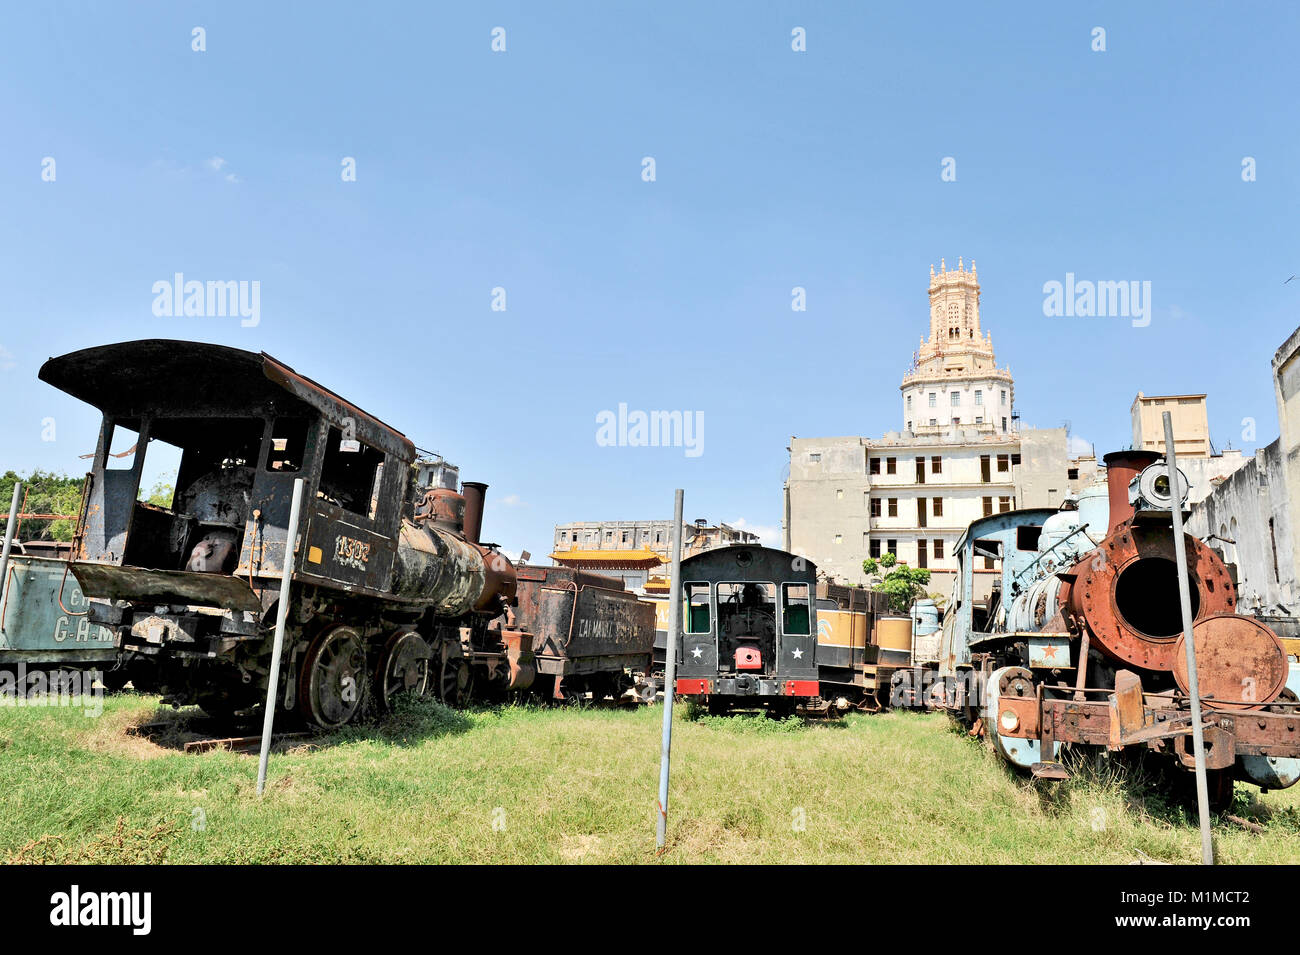 HAVANA, CUBA, MAY 9, 2009. A fied full of abandoned old locomotives in Havana, Cuba, on May 9th, 2009. Stock Photo